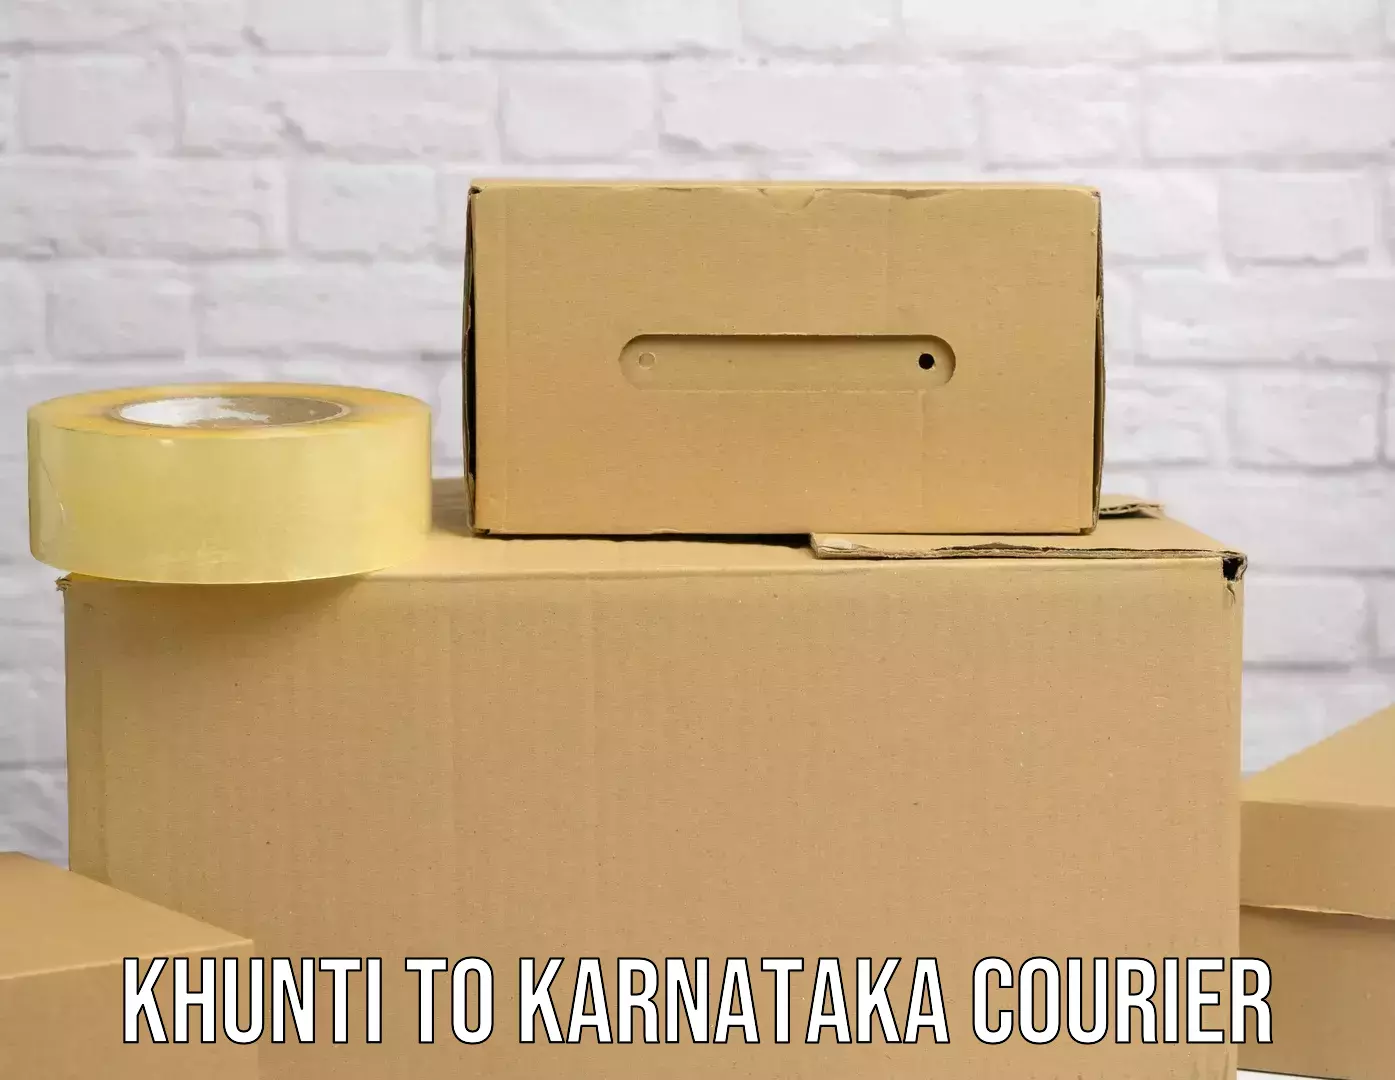 Courier service comparison Khunti to Karnataka